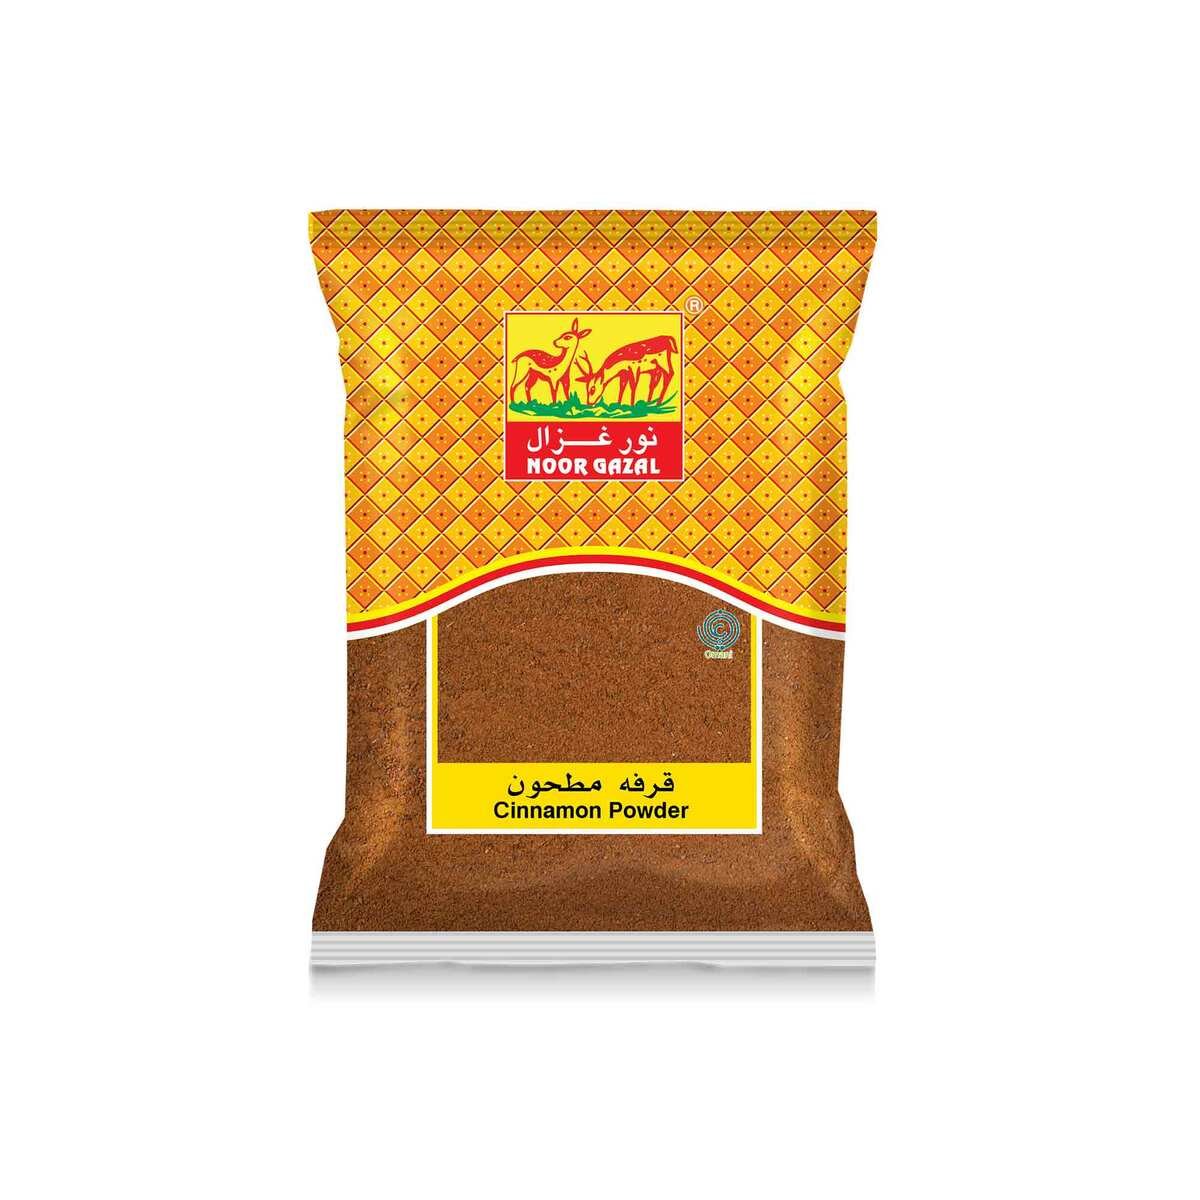 Noor Gazal Cinnamon Powder 400 g